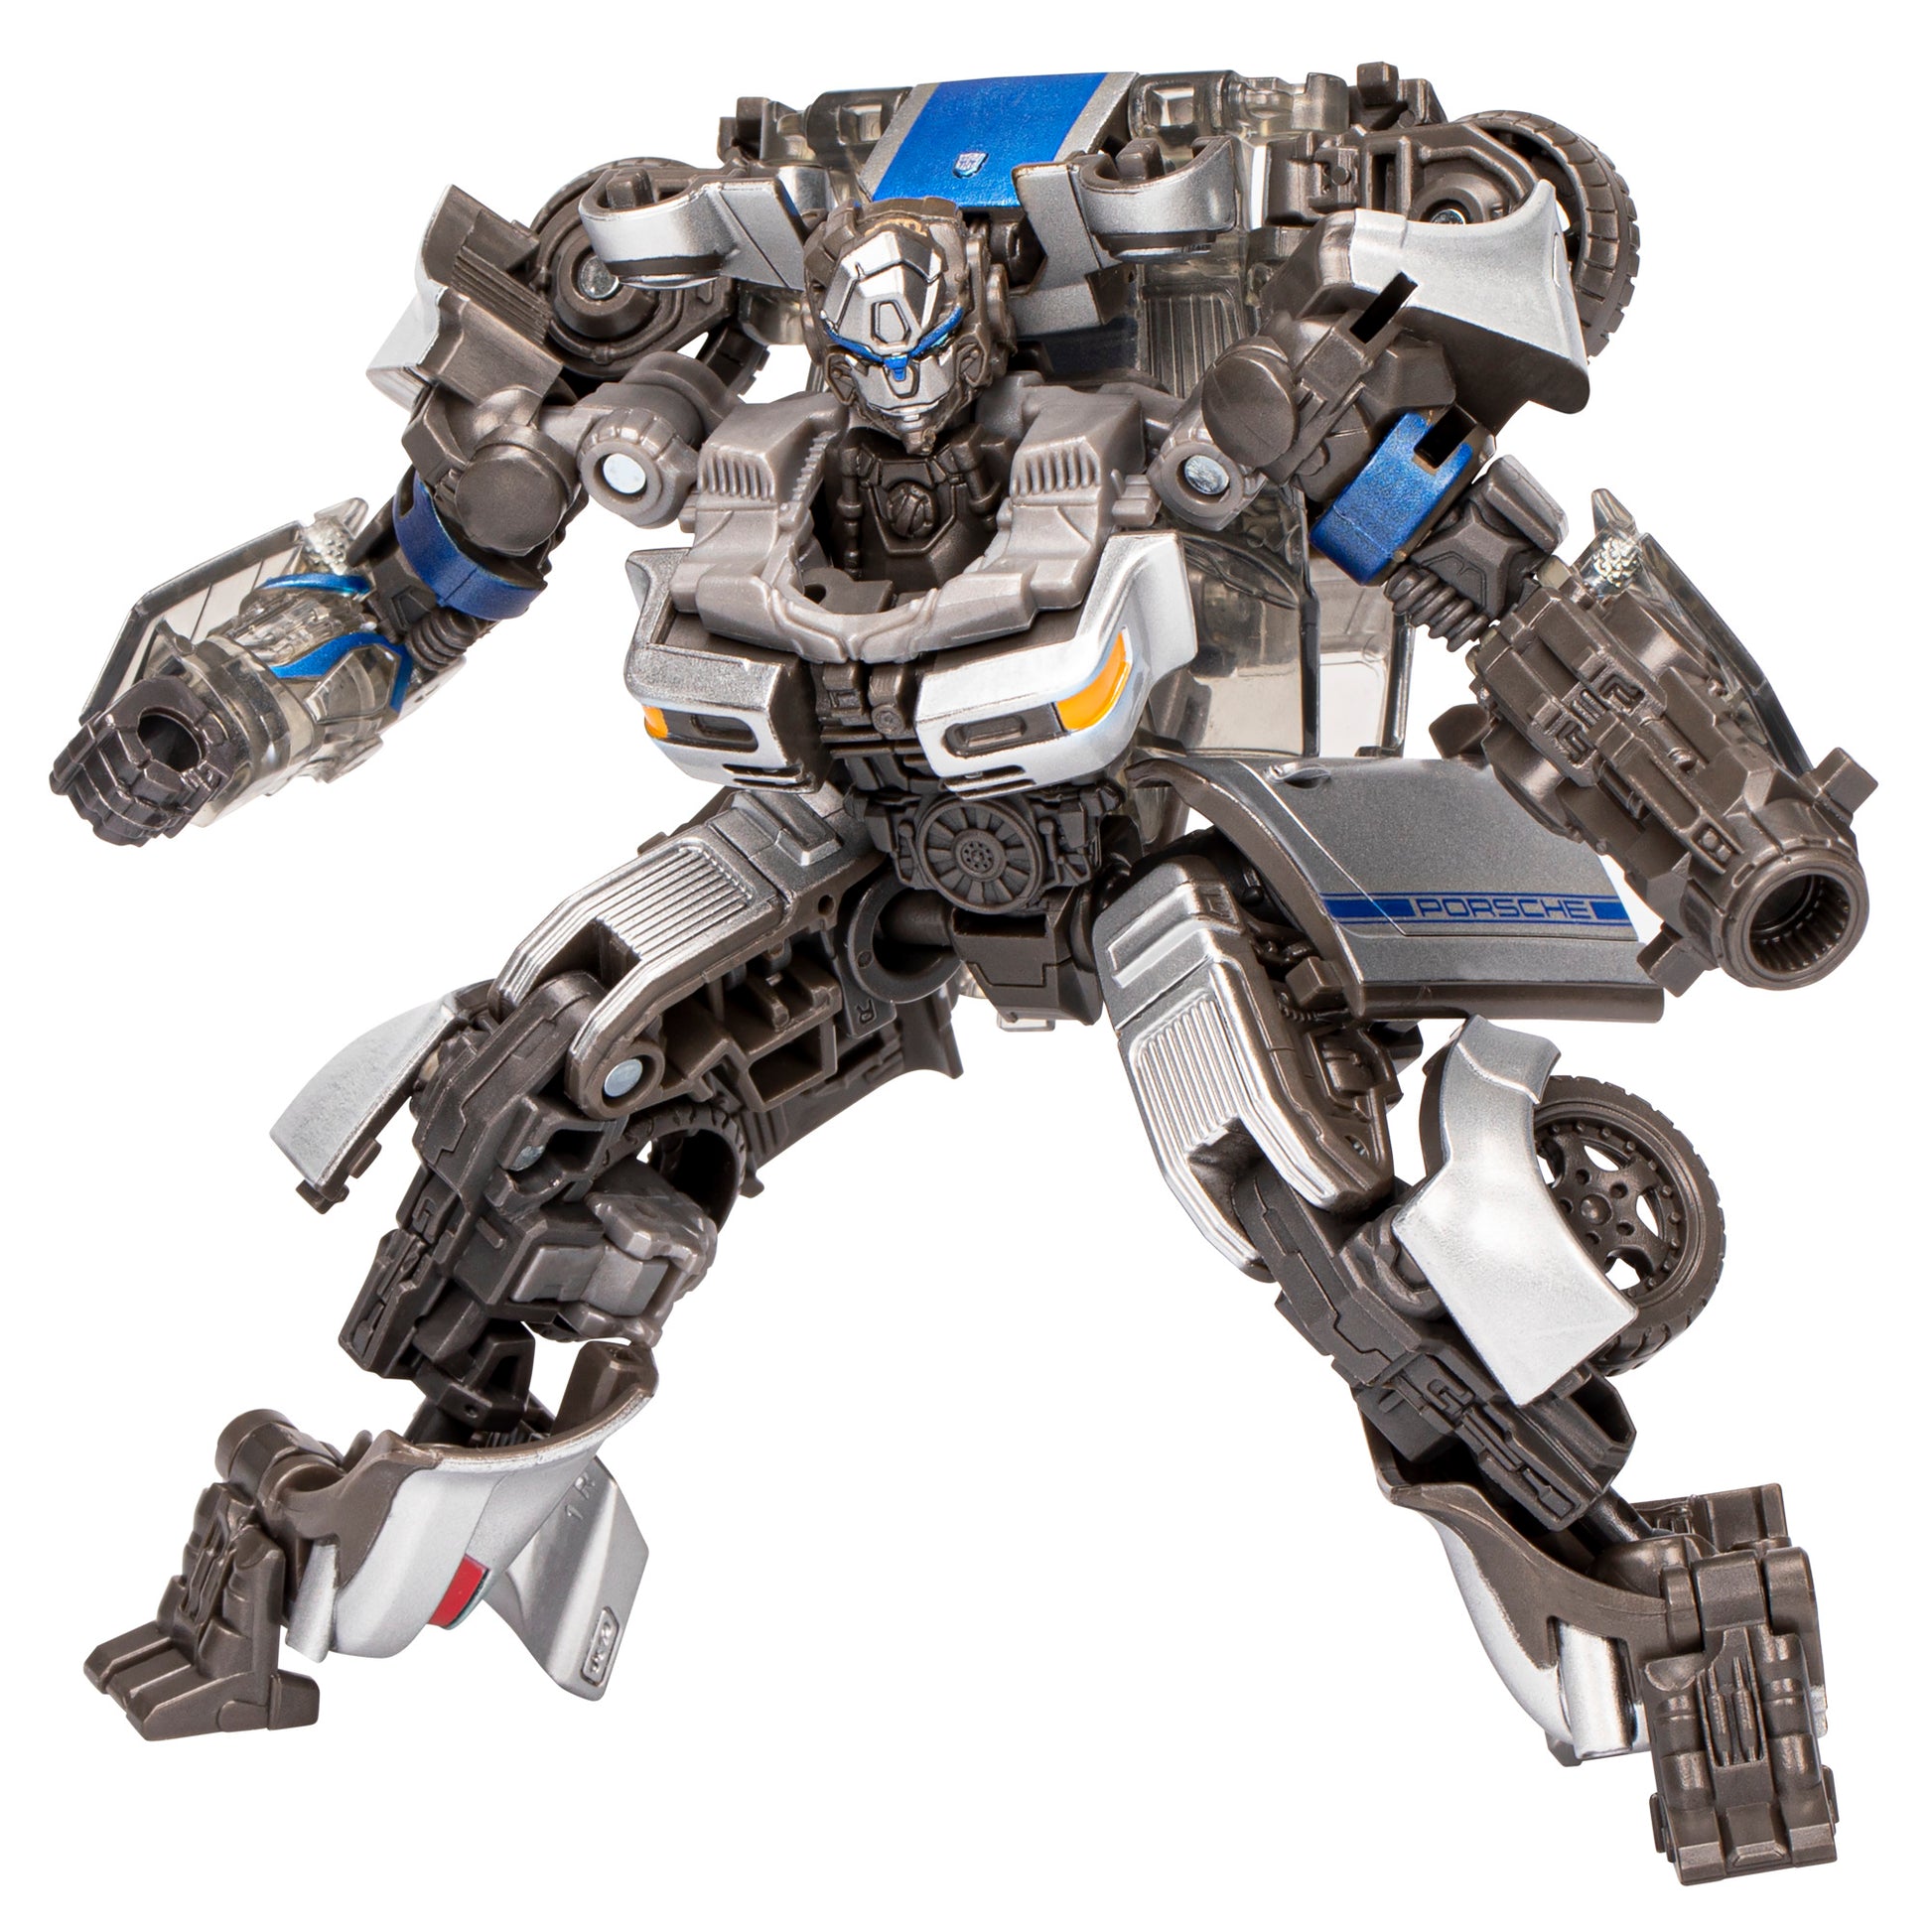 Autobot Mirage Action Figure Toy - Heretoserveyou